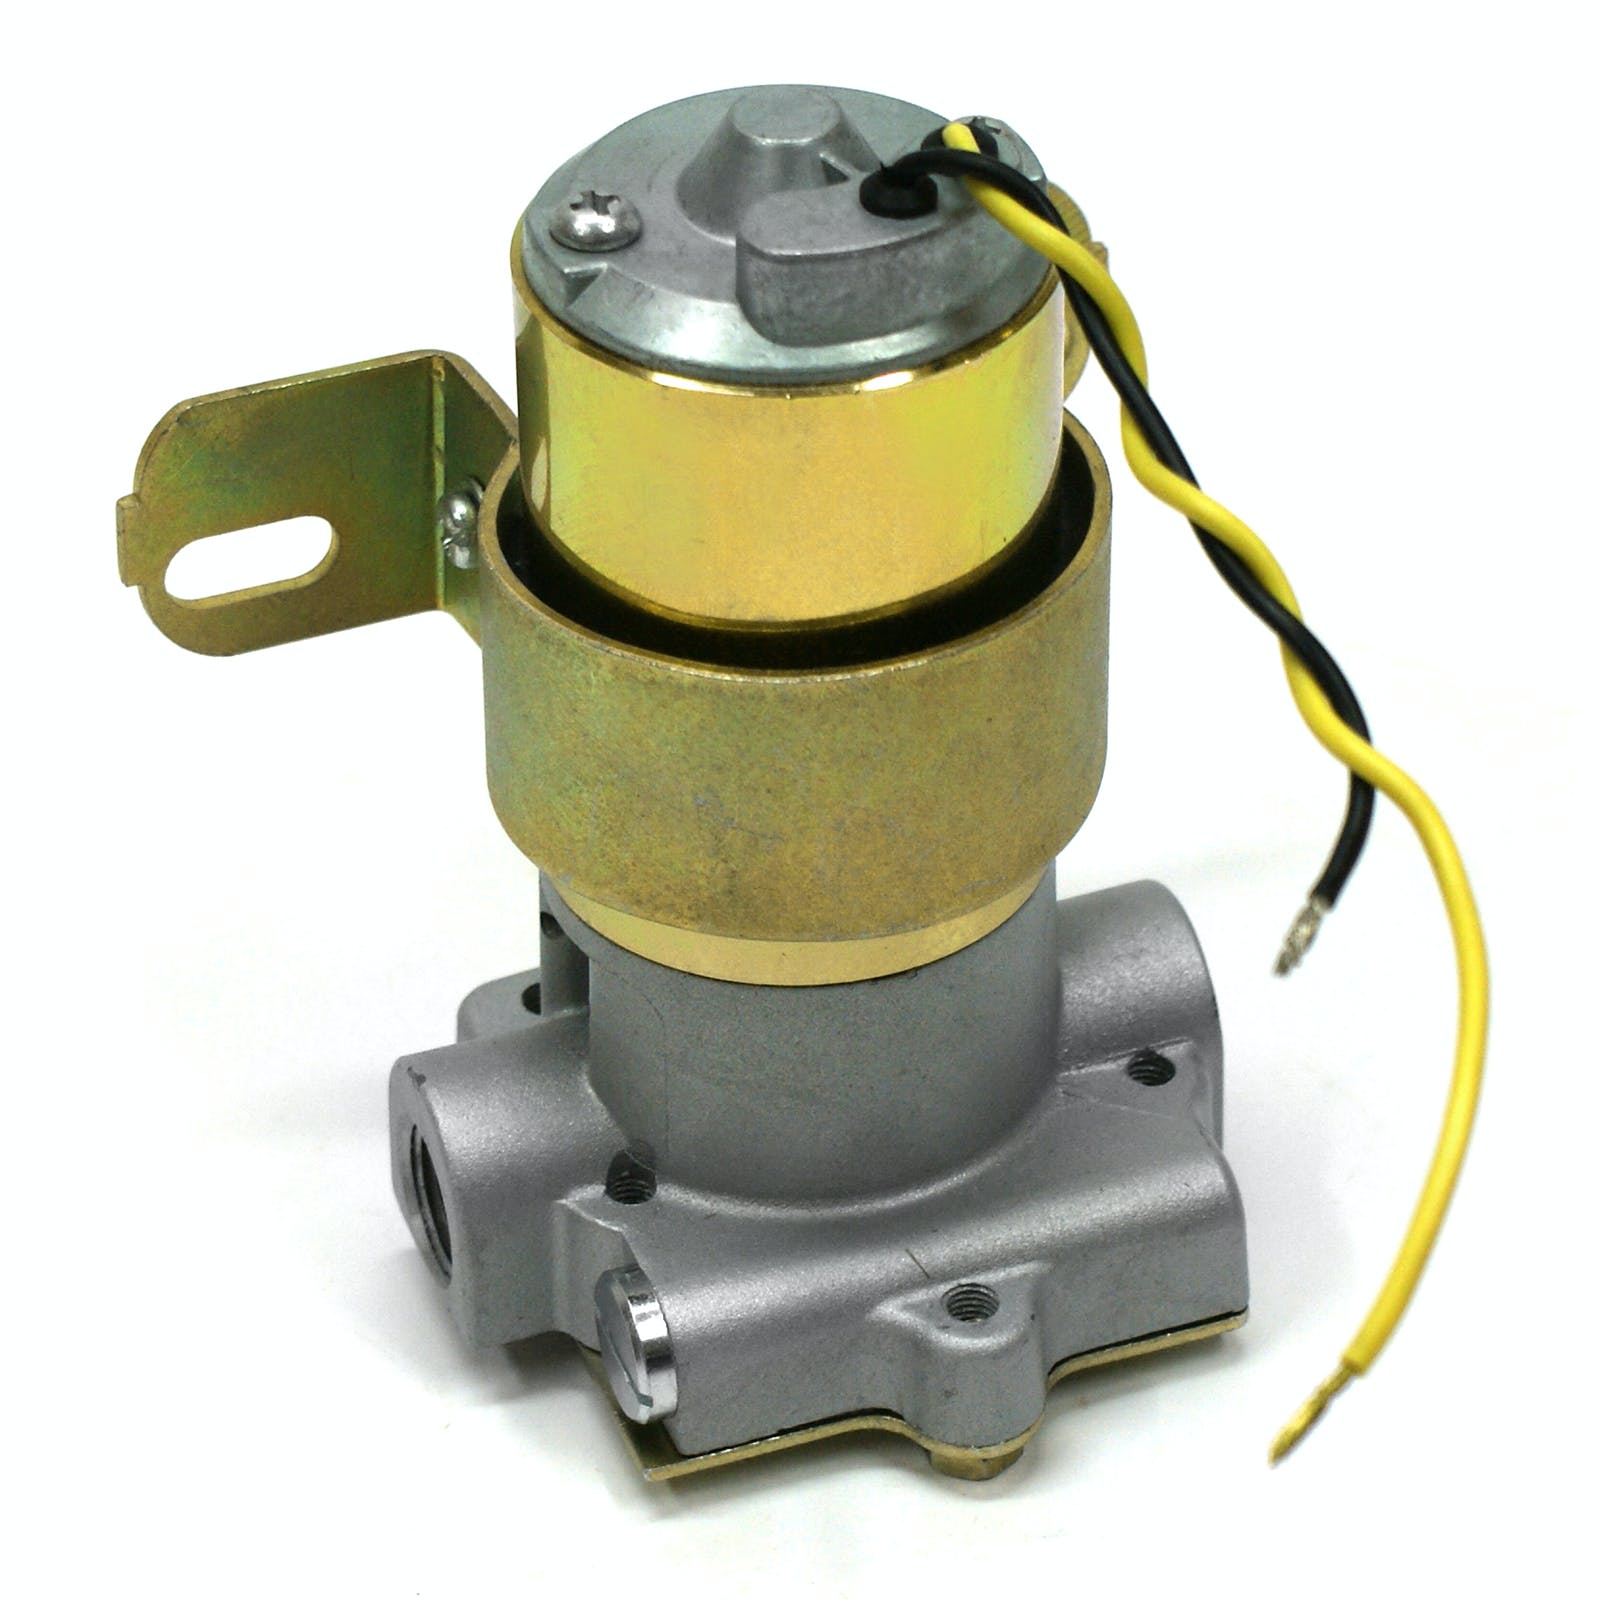 Speedmaster PCE145.1025 110 Gph Electric Fuel Pump Red Regulator and Gauge Combo Kit